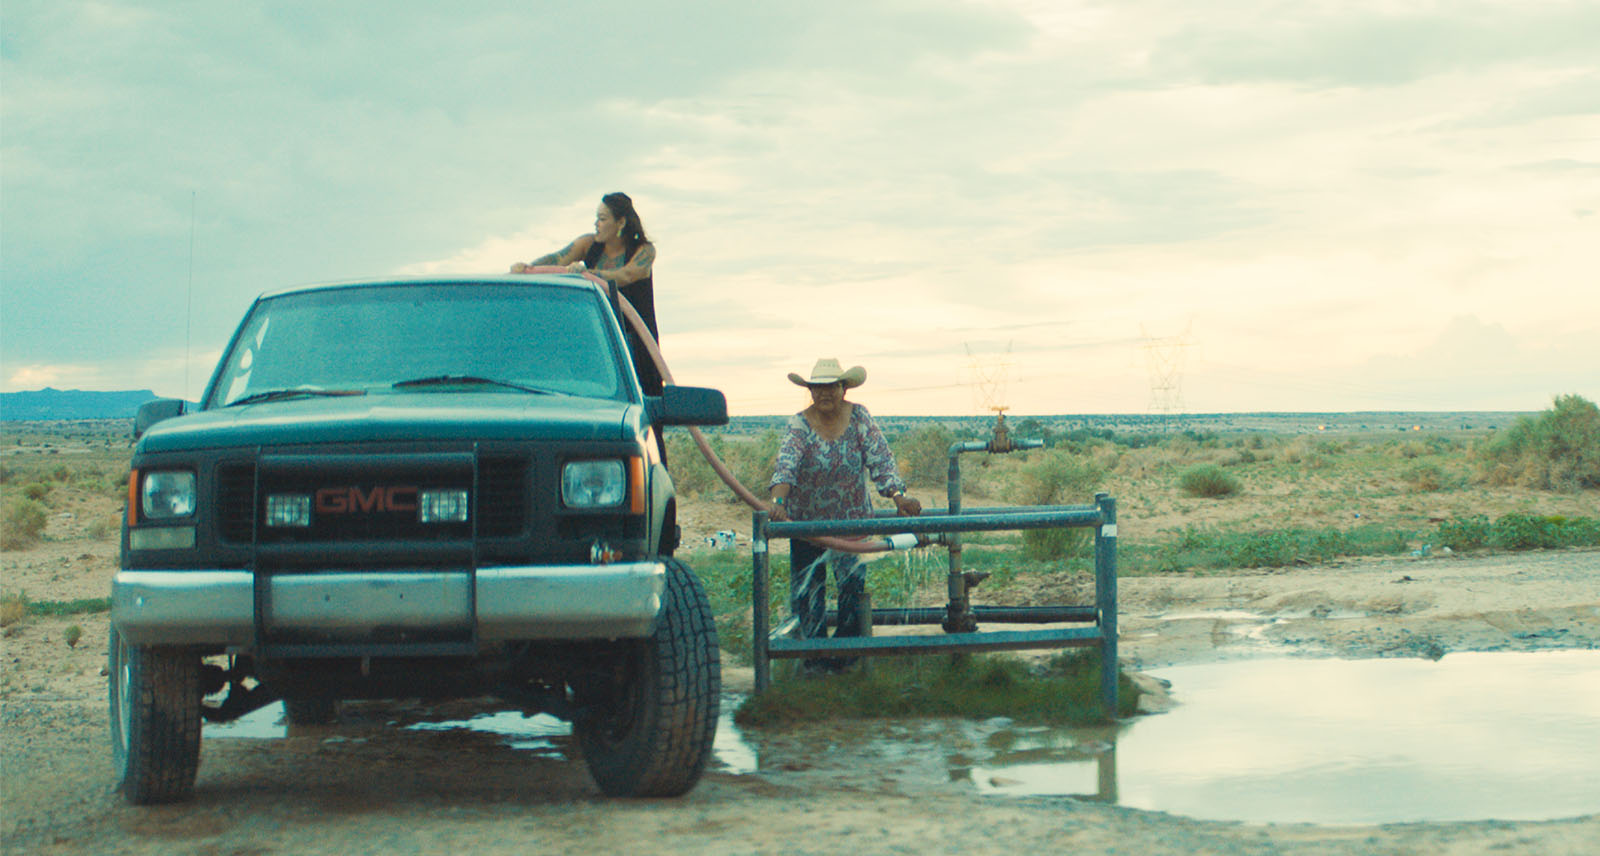 Film still from Boil Alert premiere shows truck parked in a field